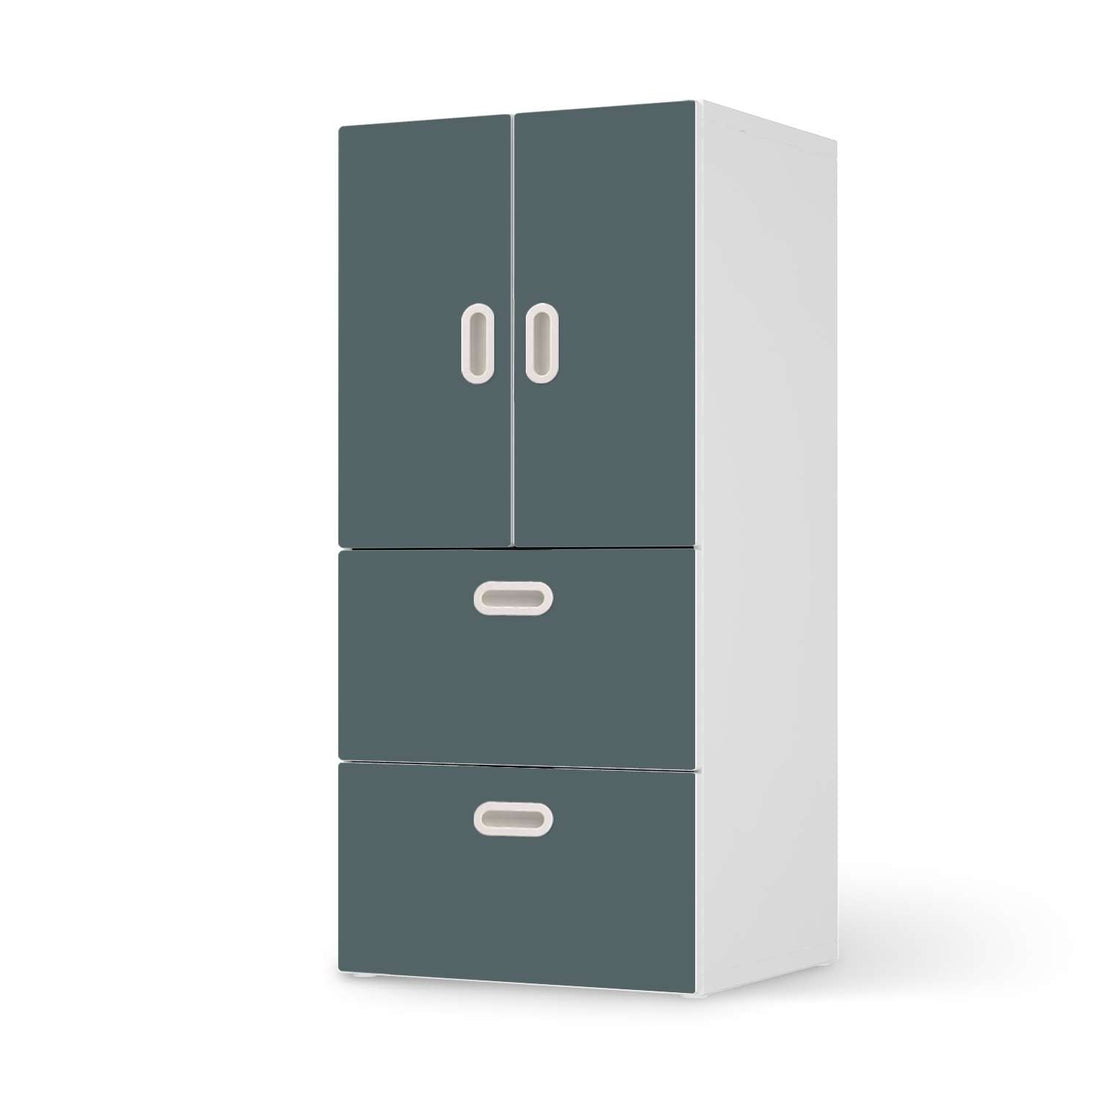 Möbelfolie Blaugrau Light - IKEA Stuva / Fritids kombiniert - 2 Schubladen und 2 kleine Türen  - weiss